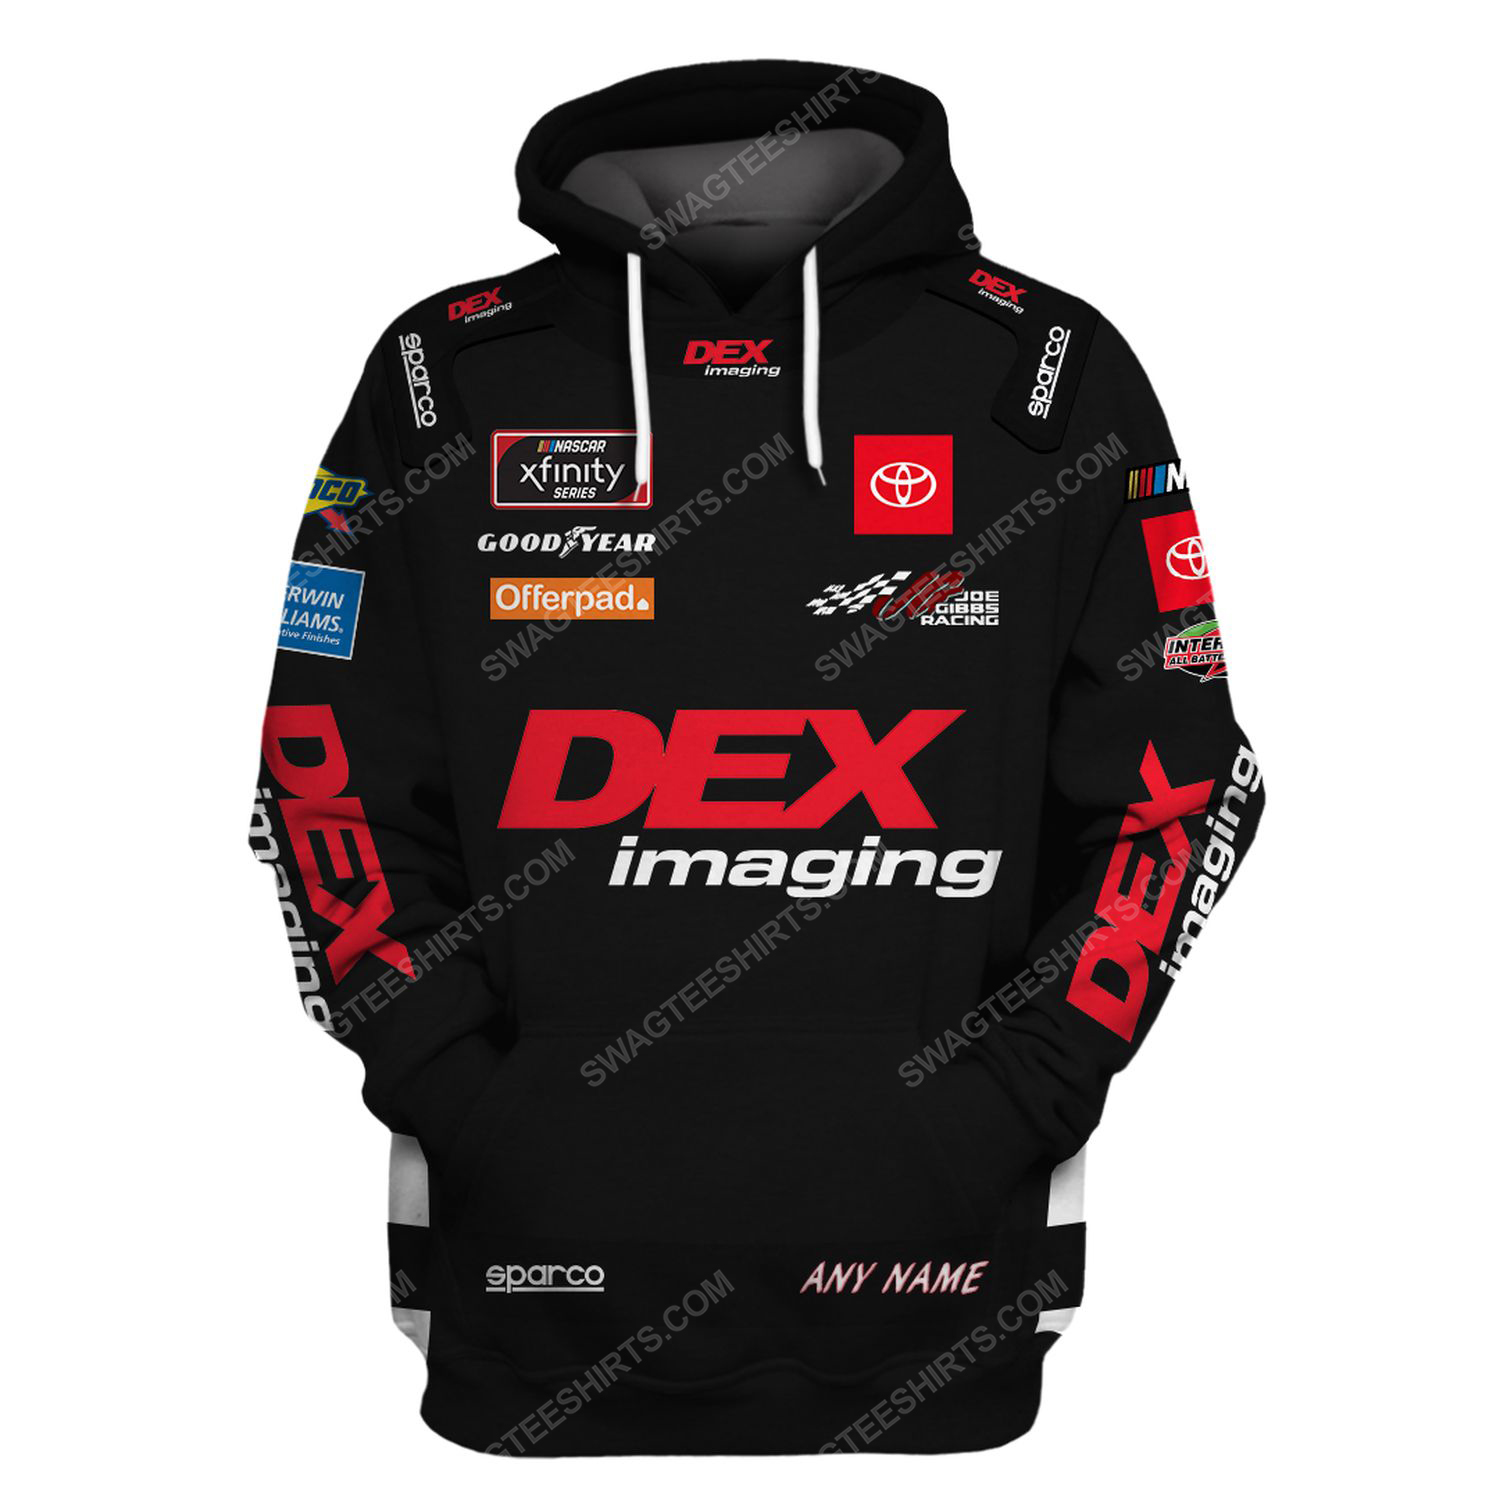 [special edition] Custom the dex racing team motorsport full printing shirt – maria